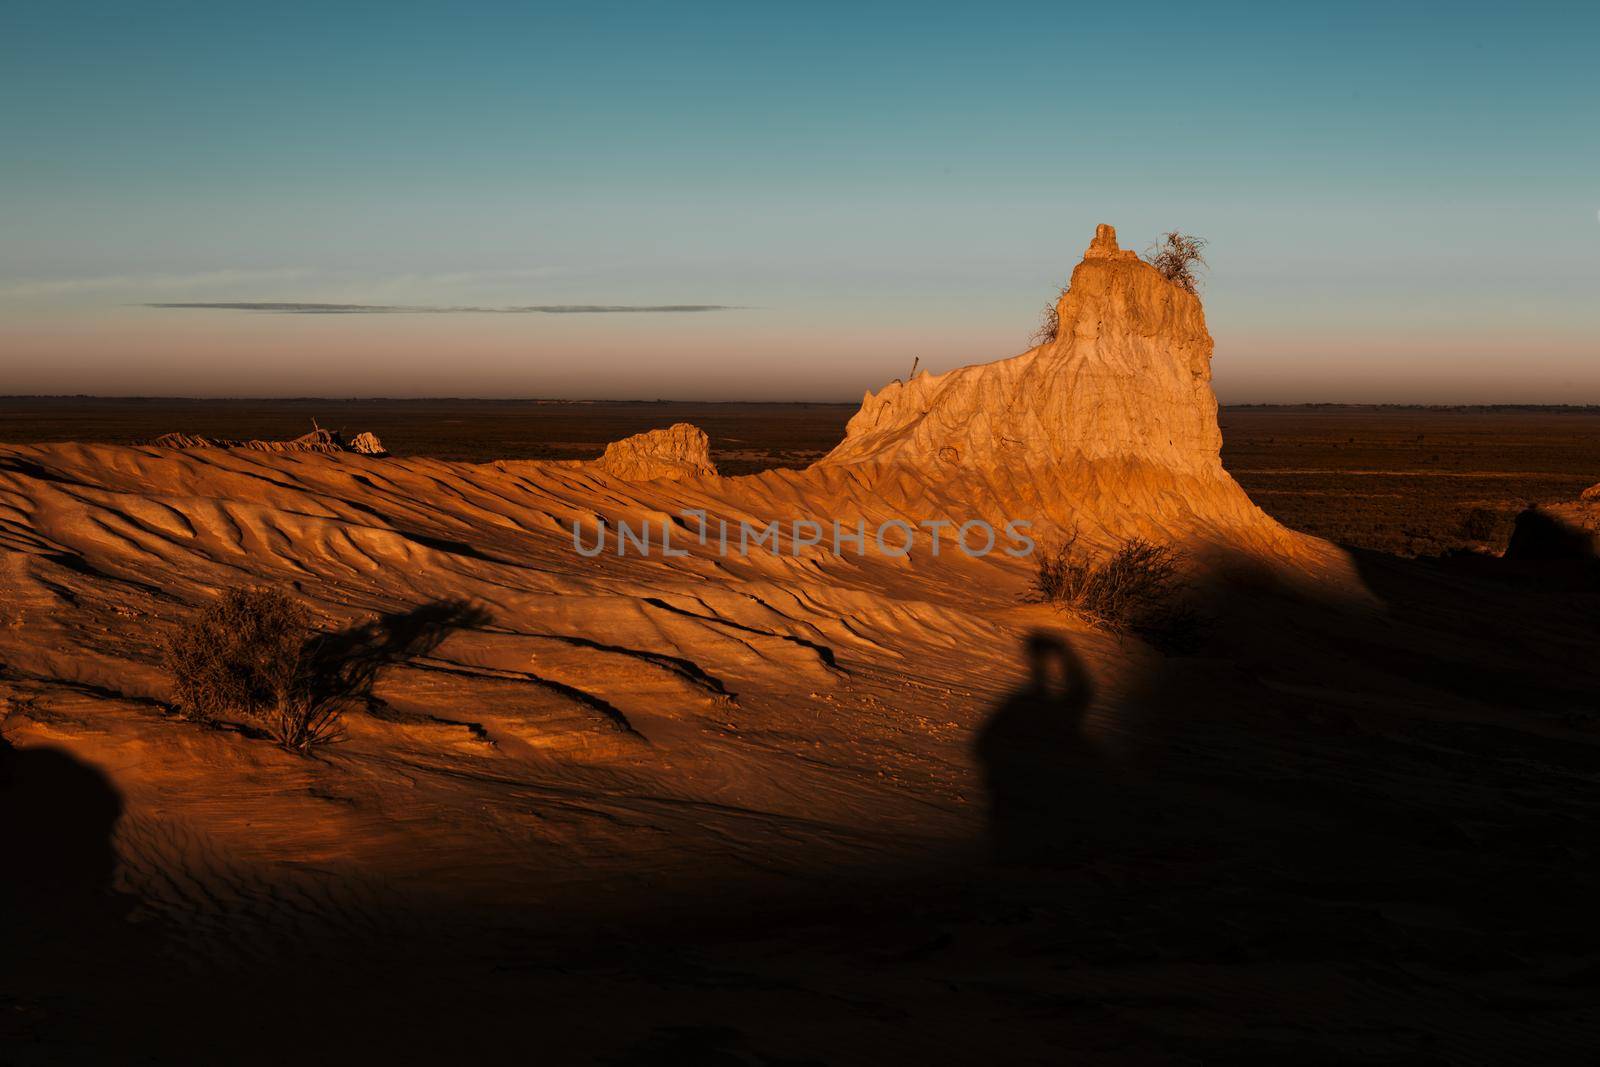 Beautful light and shadow falls across the desert landforms in outback Australia